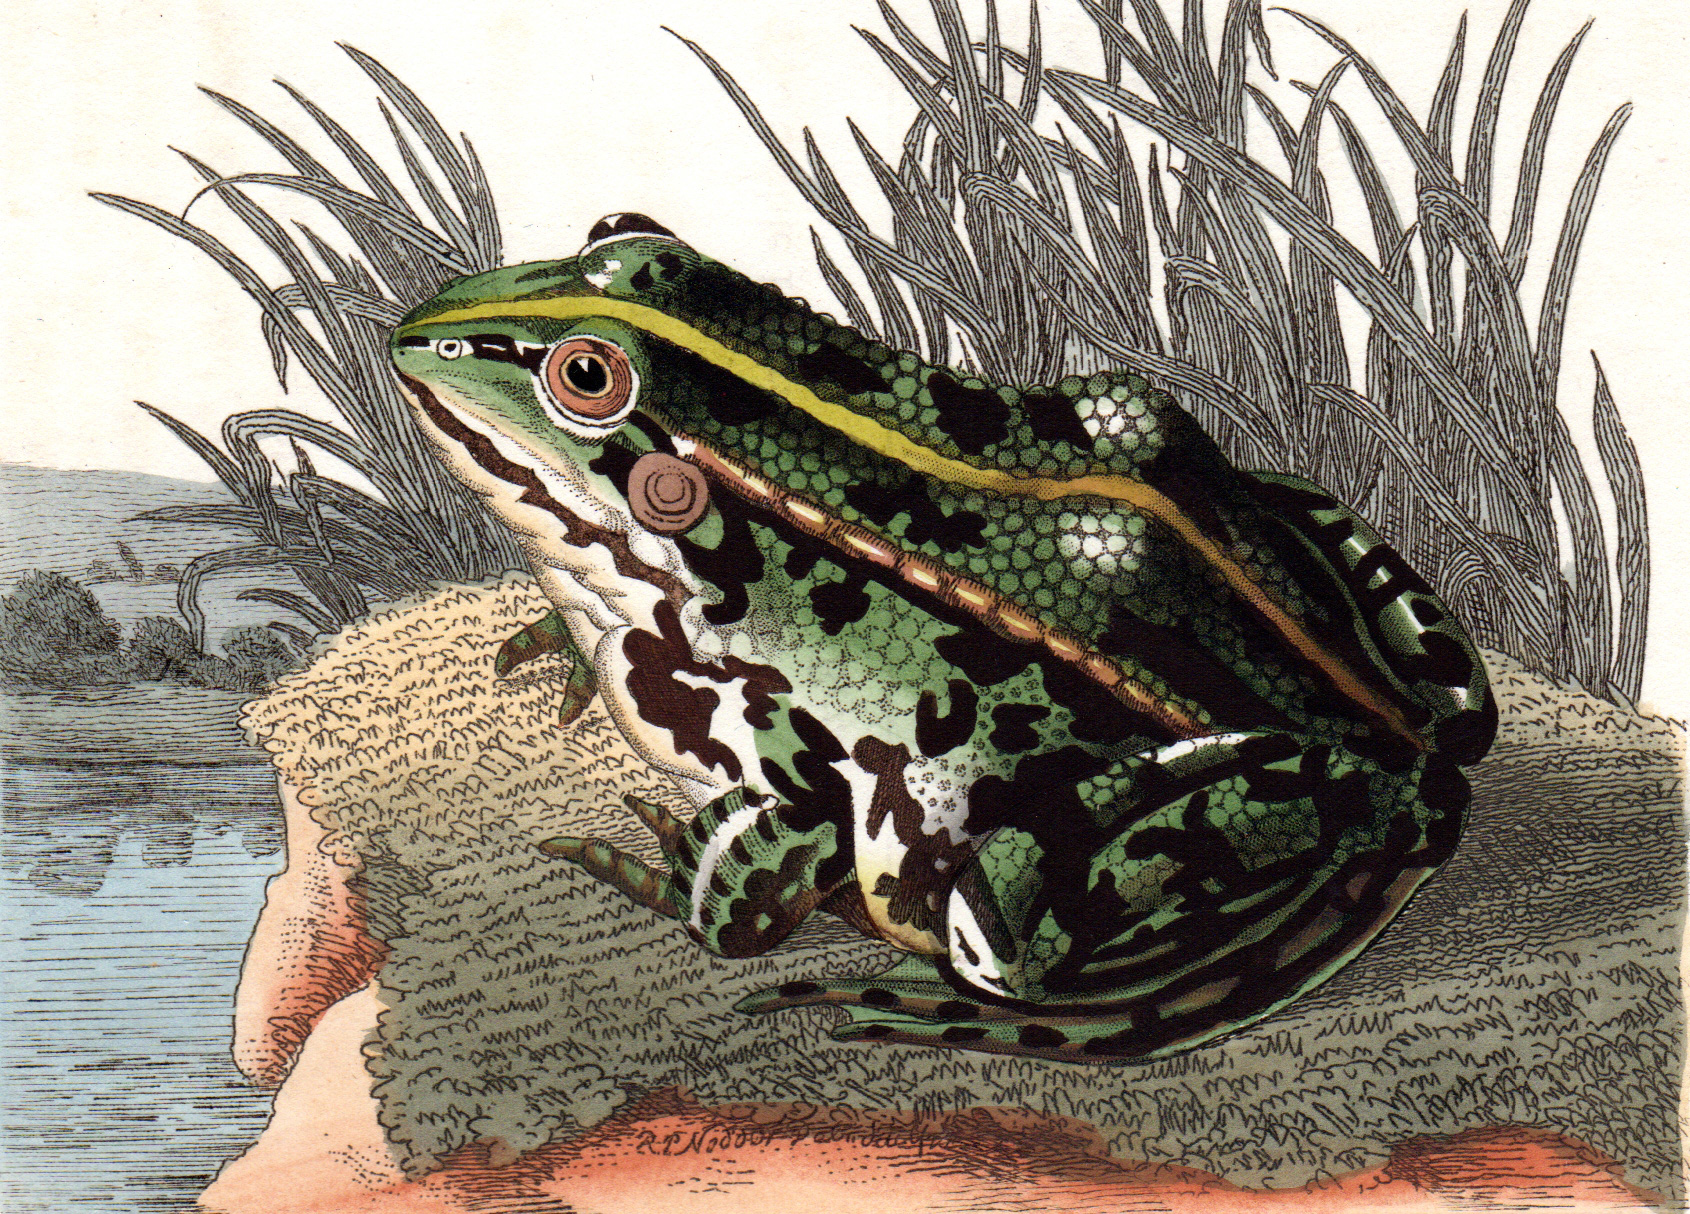 Shaw, George / Nodder, Frederick & Robert P. – Frogs, Turtles, Lizards, etc.